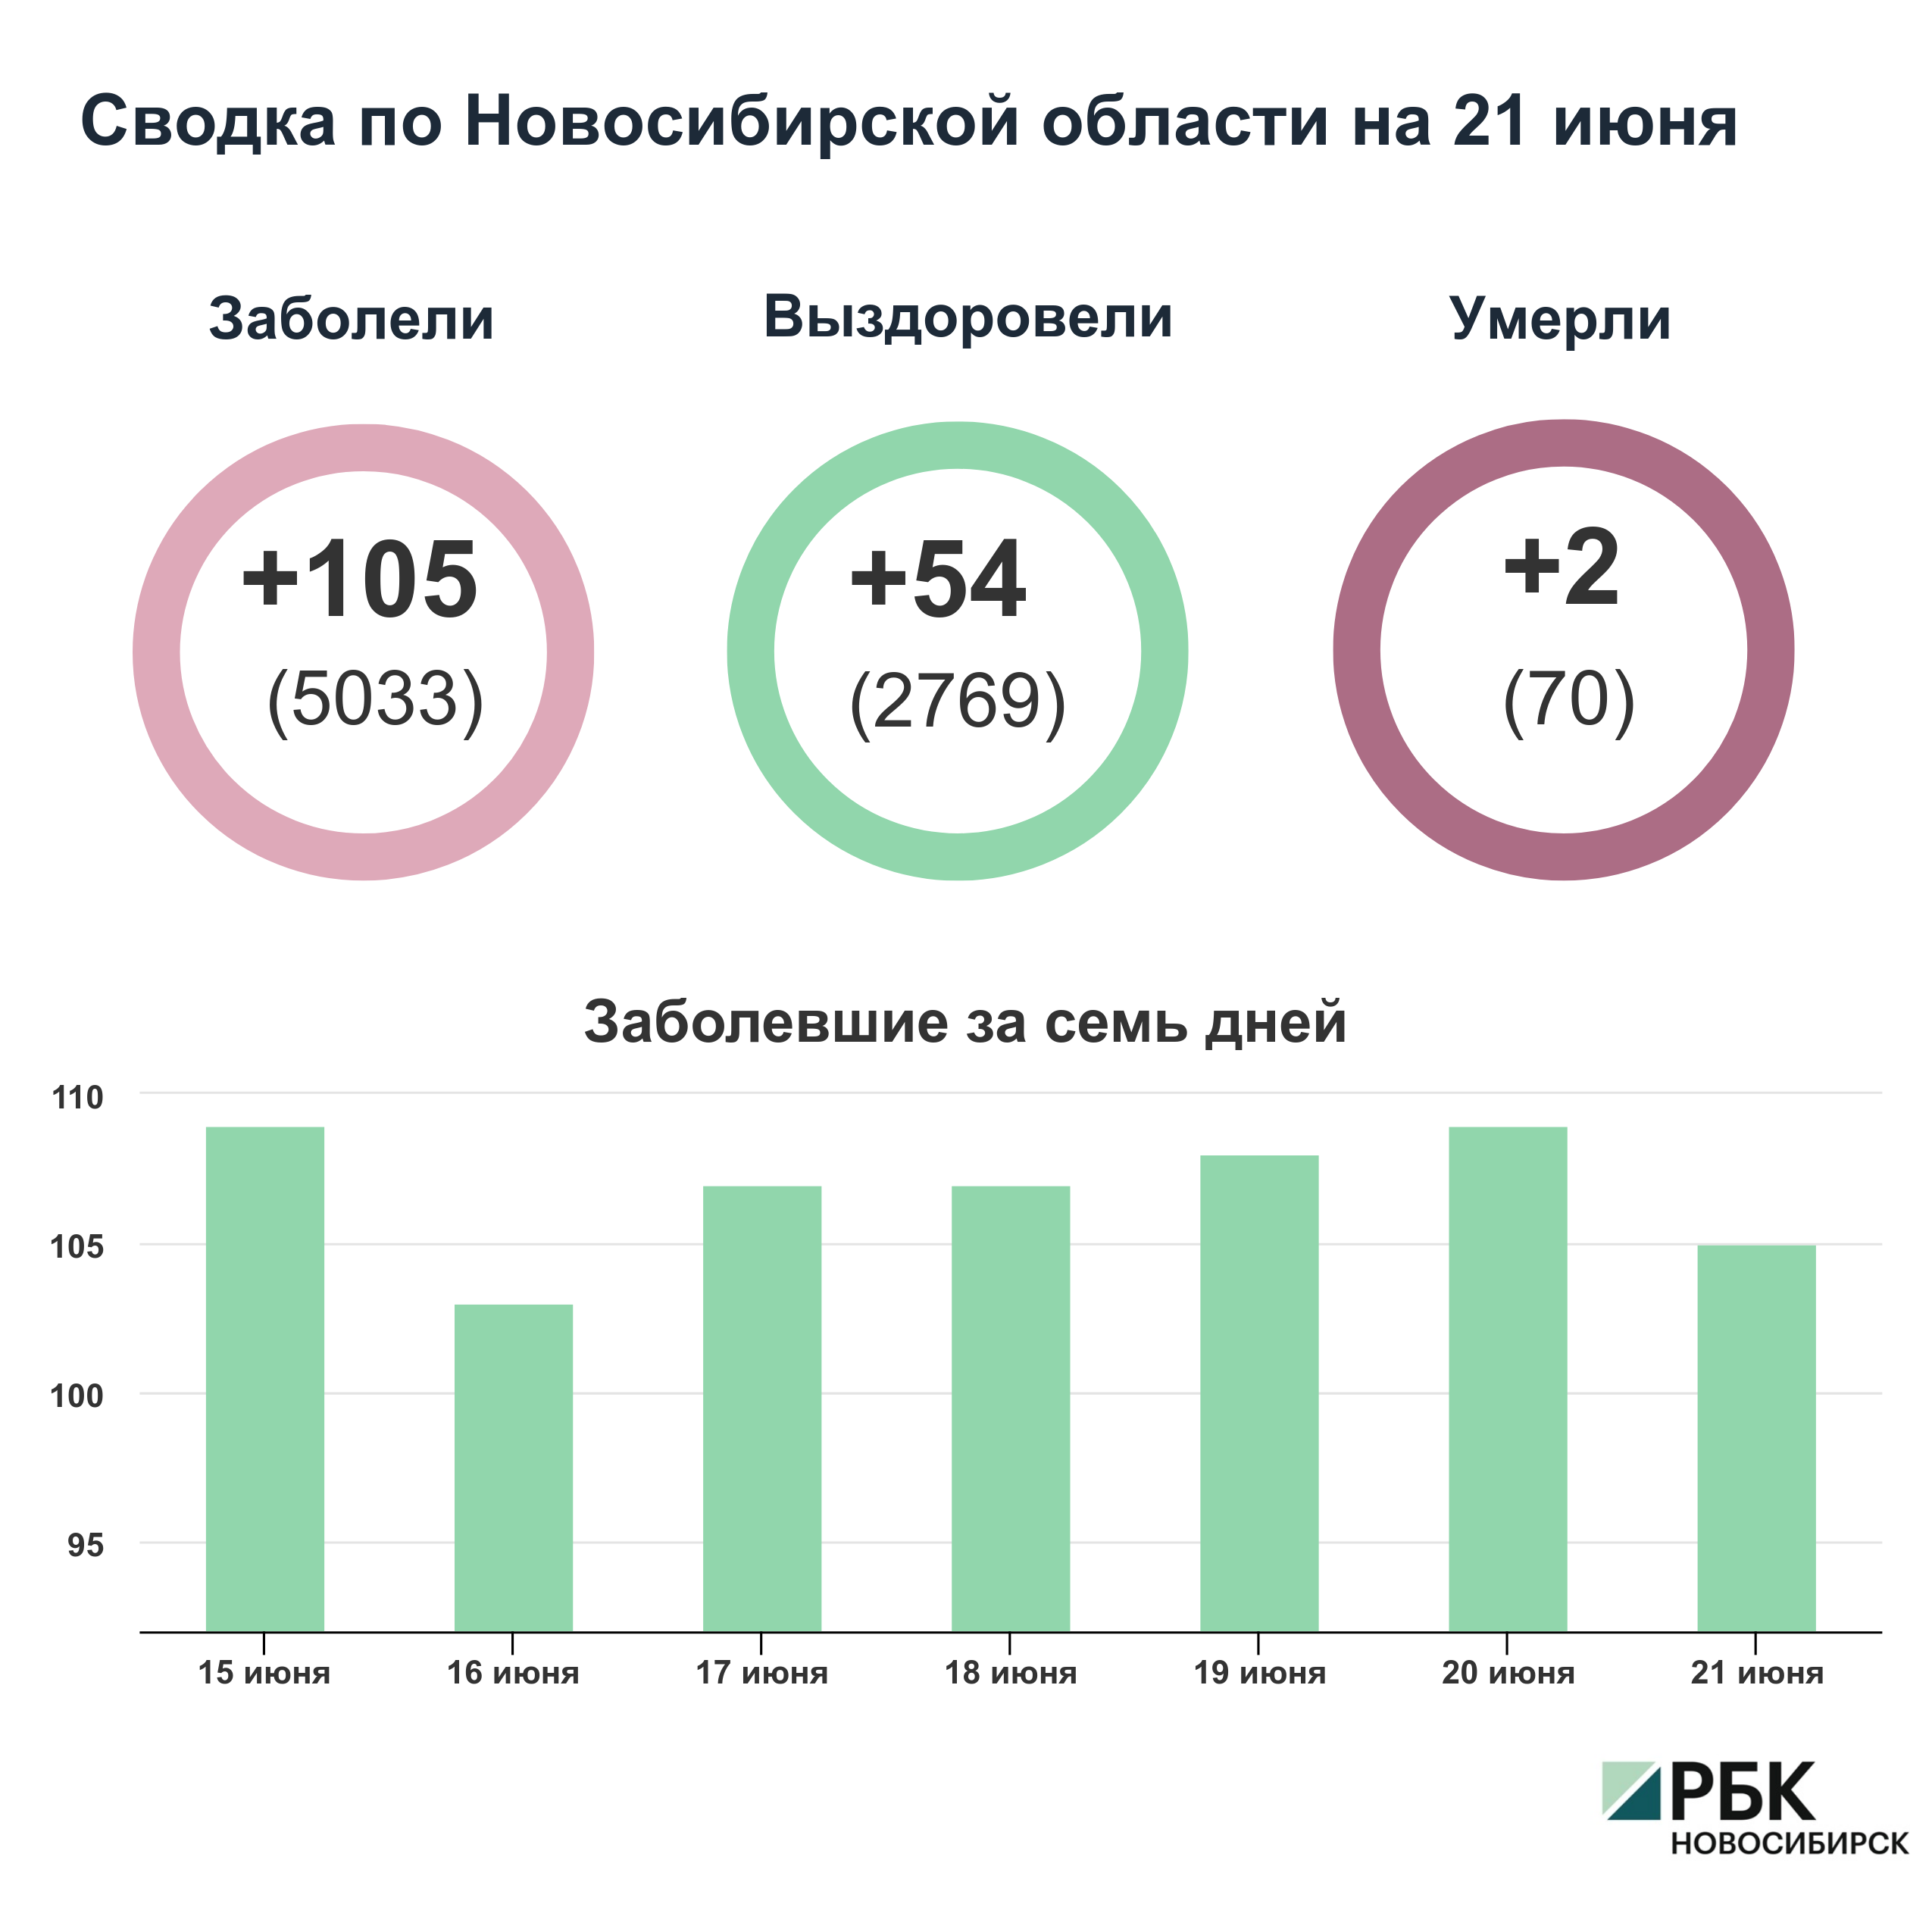 Коронавирус в Новосибирске: сводка на 21 июня